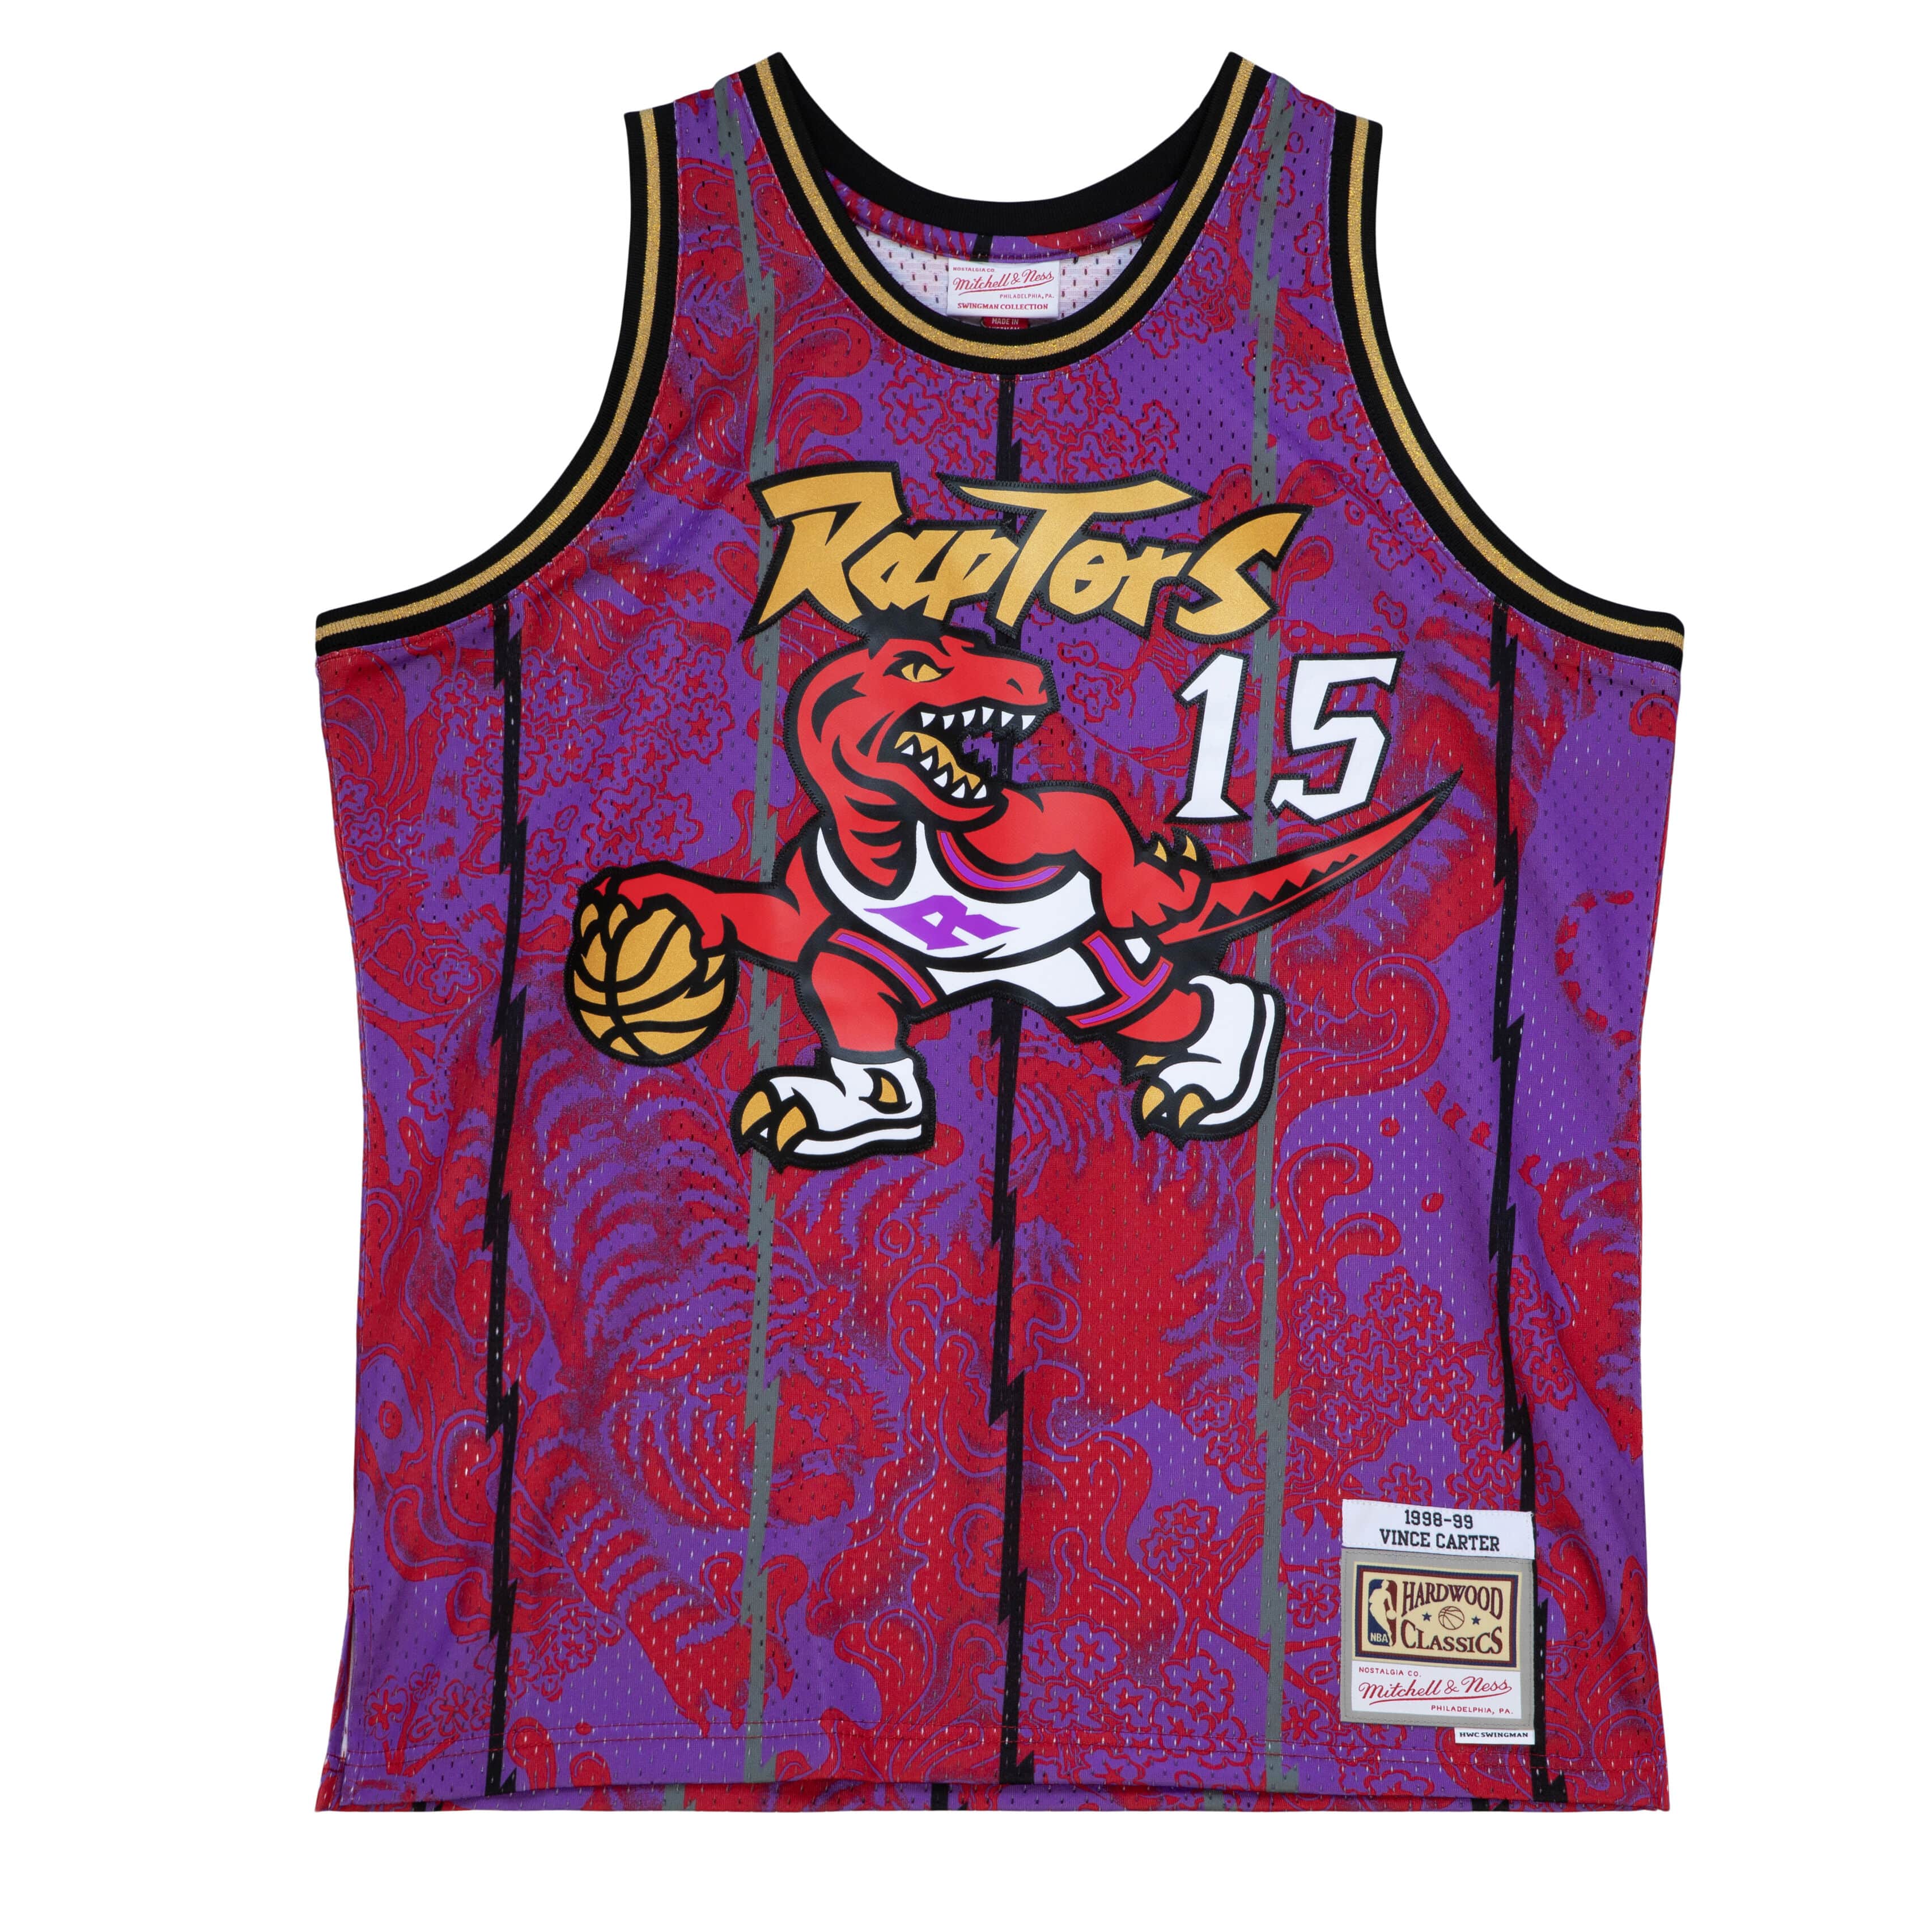 Raptors fourth jersey appears on NBA Europe store's website - Raptors HQ